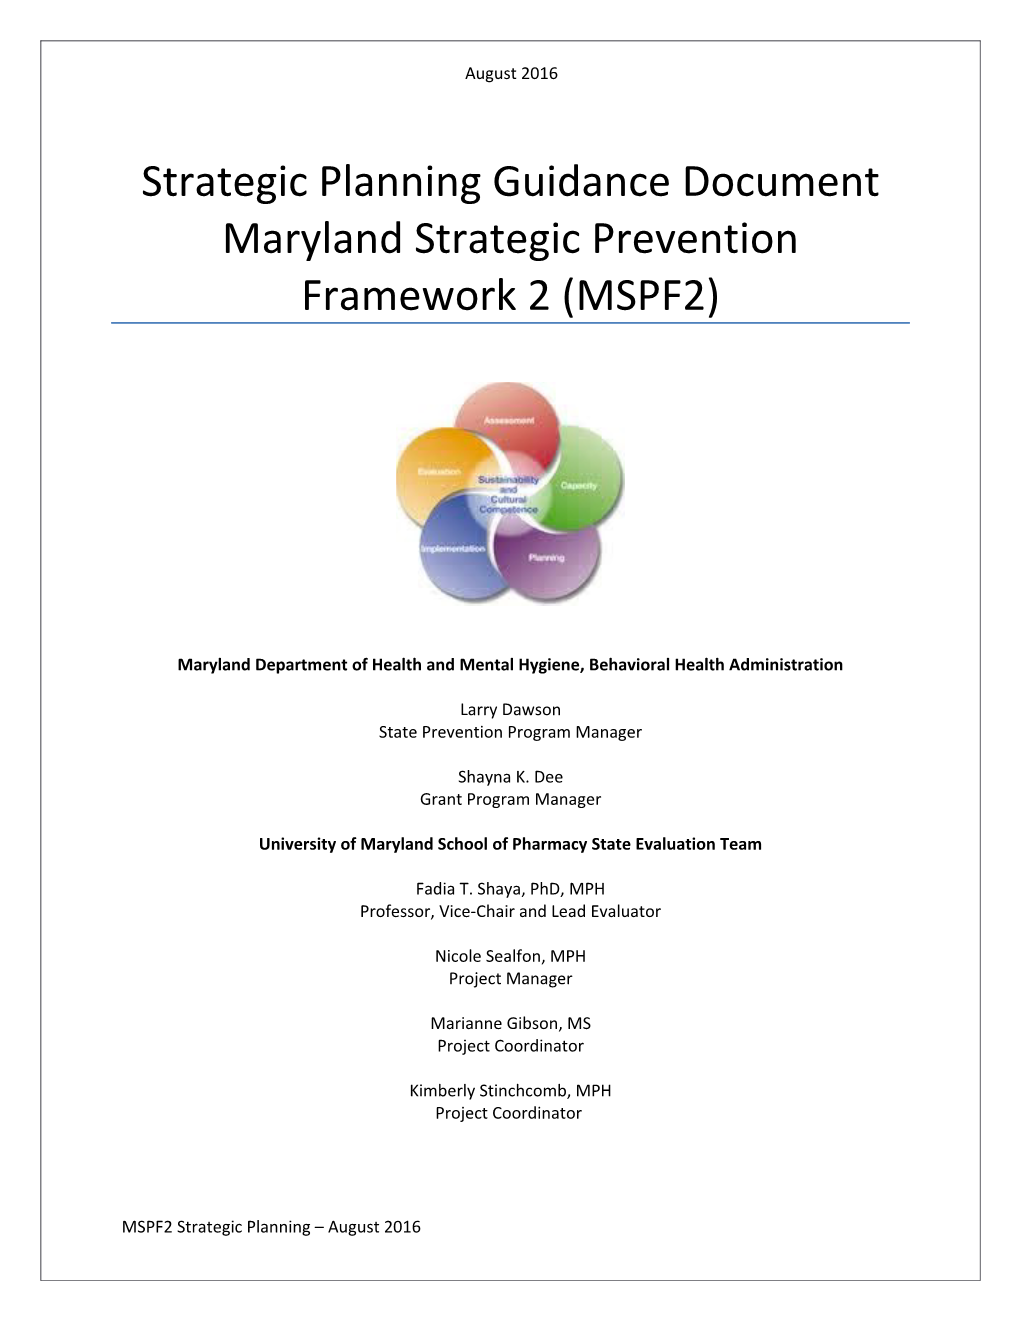 Strategic Planning Guidance Document Maryland Strategic Prevention Framework 2 (MSPF2)